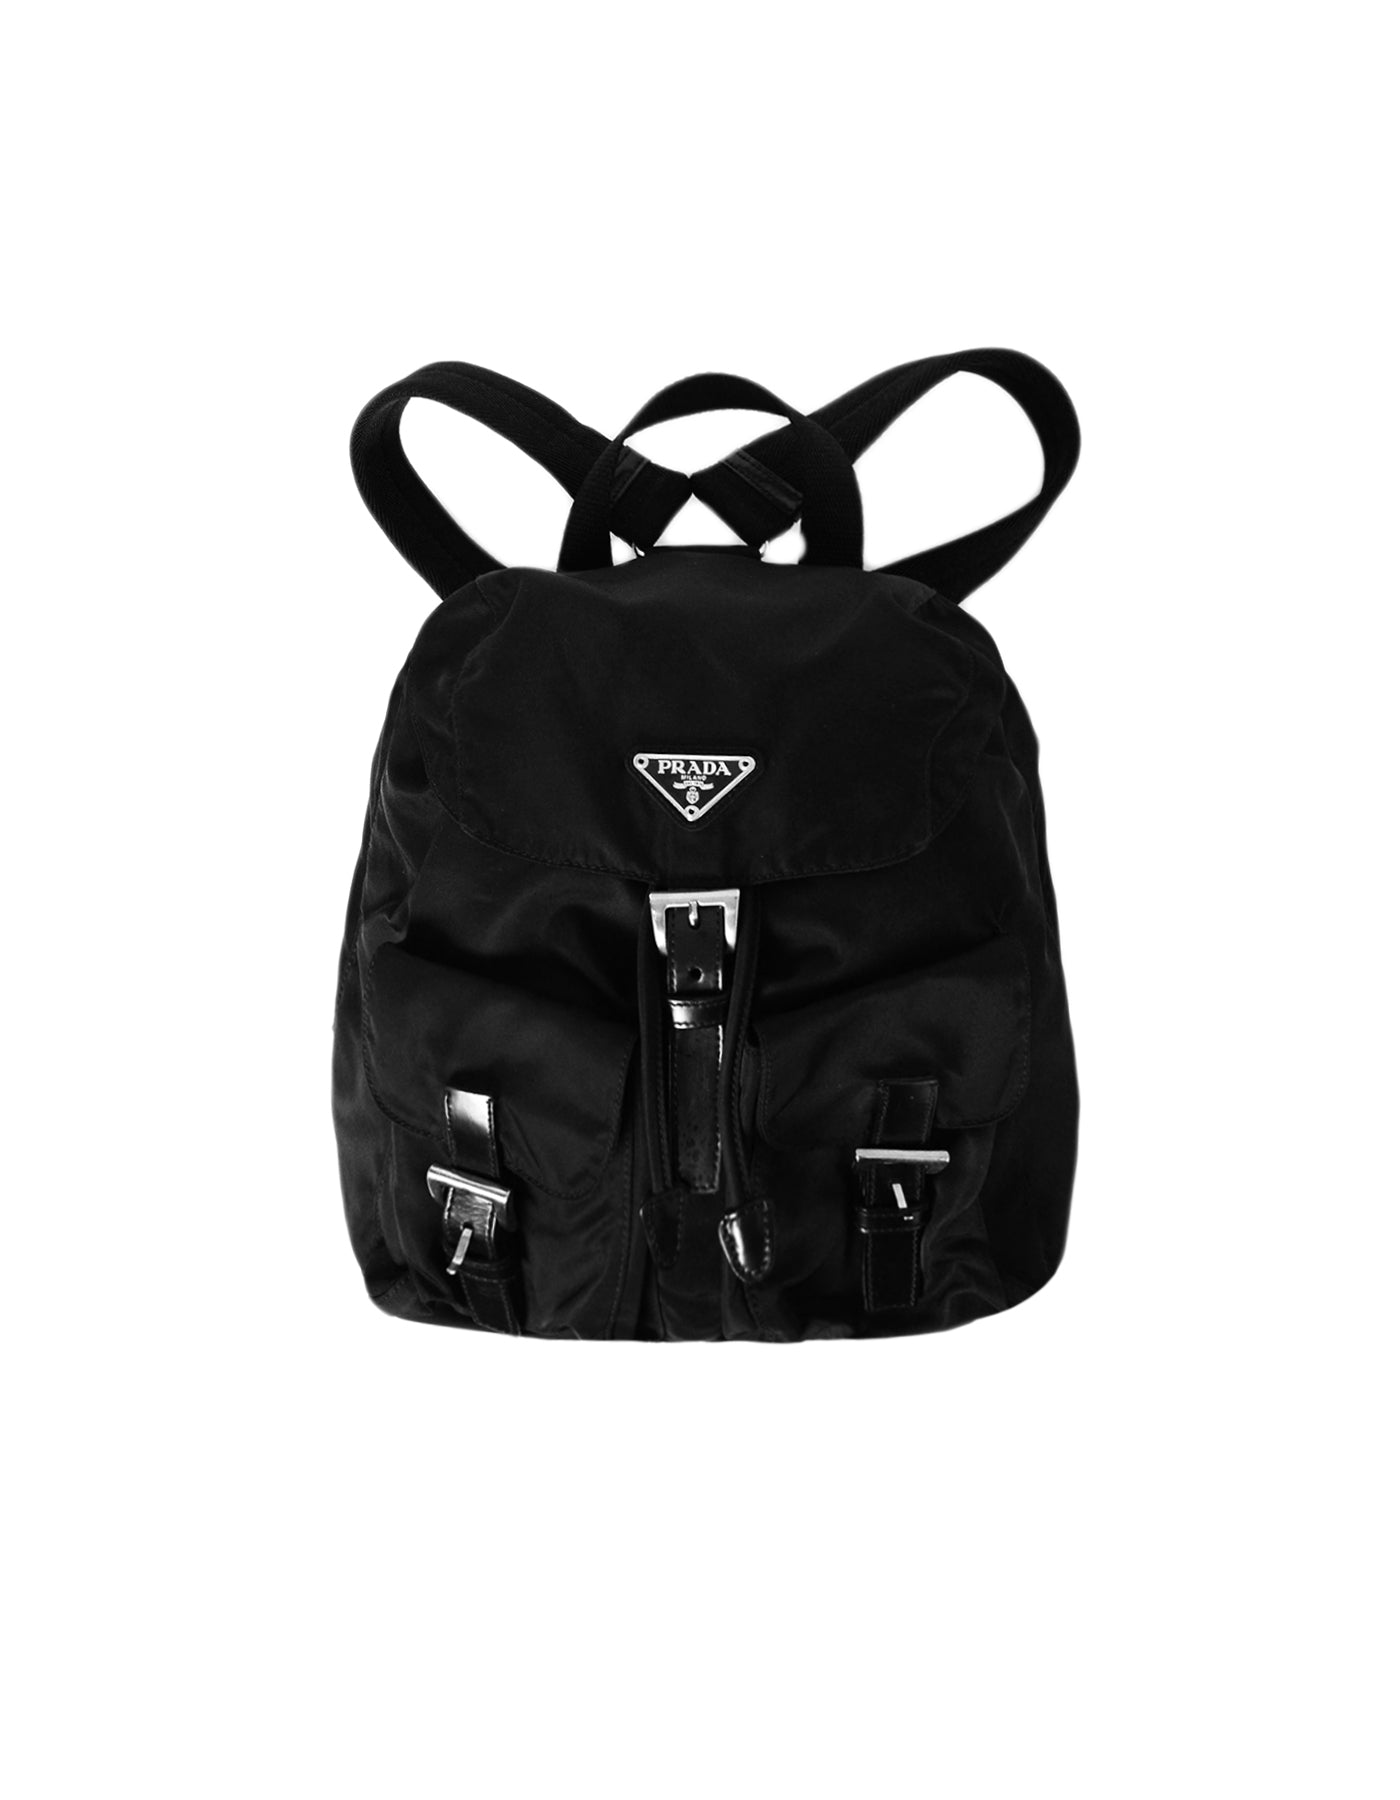 Prada Black Nylon Small Double Pocket Backpack Bag